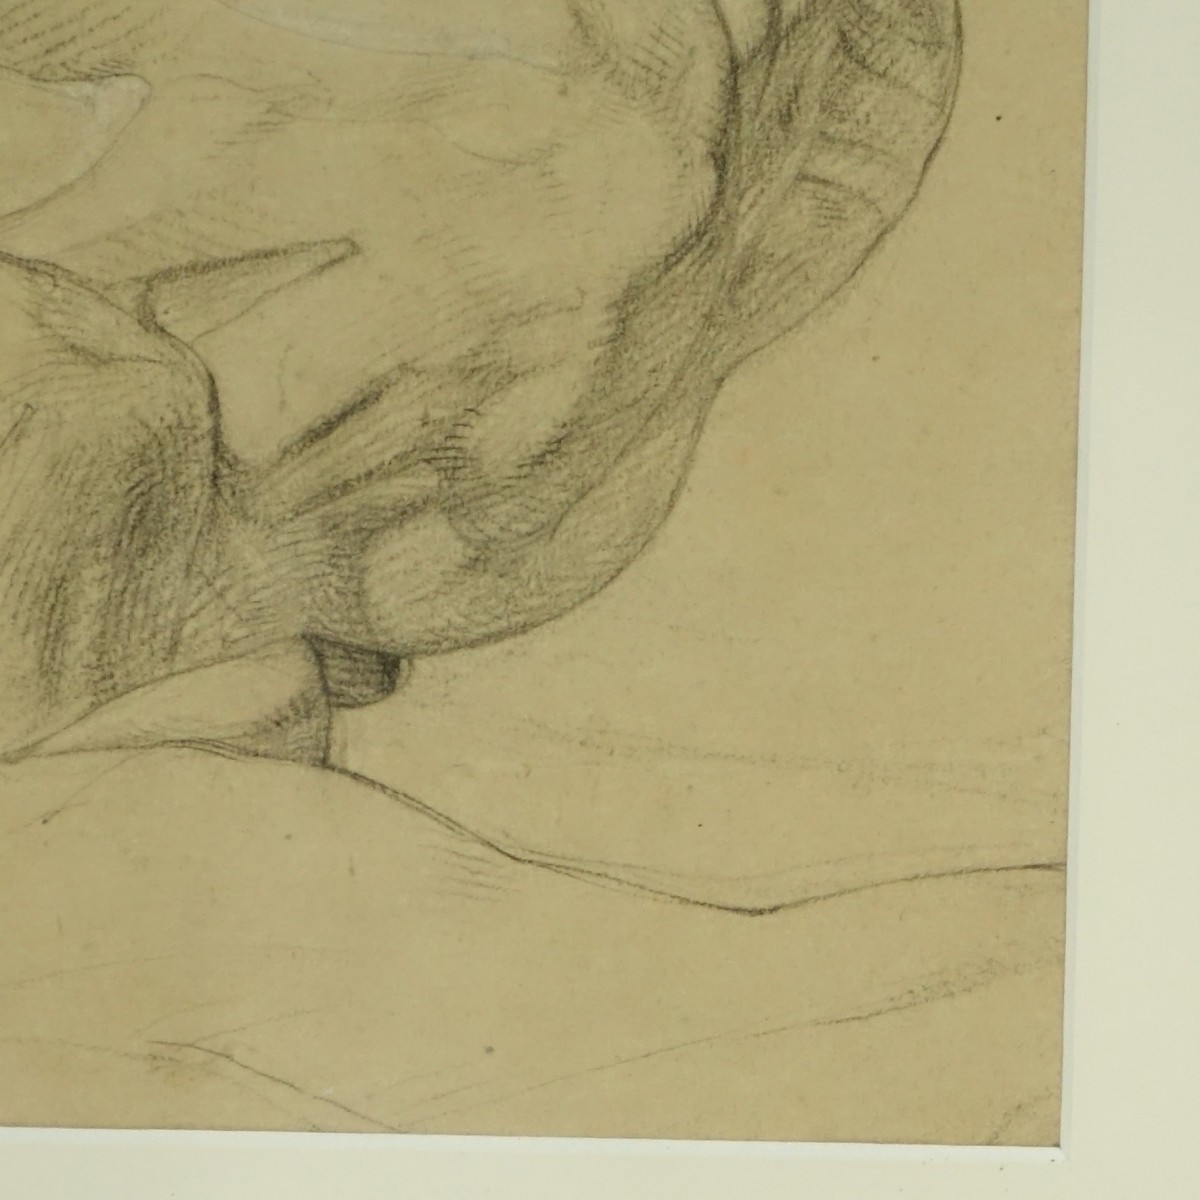 Pencil Sketch Anatomical Man's Head